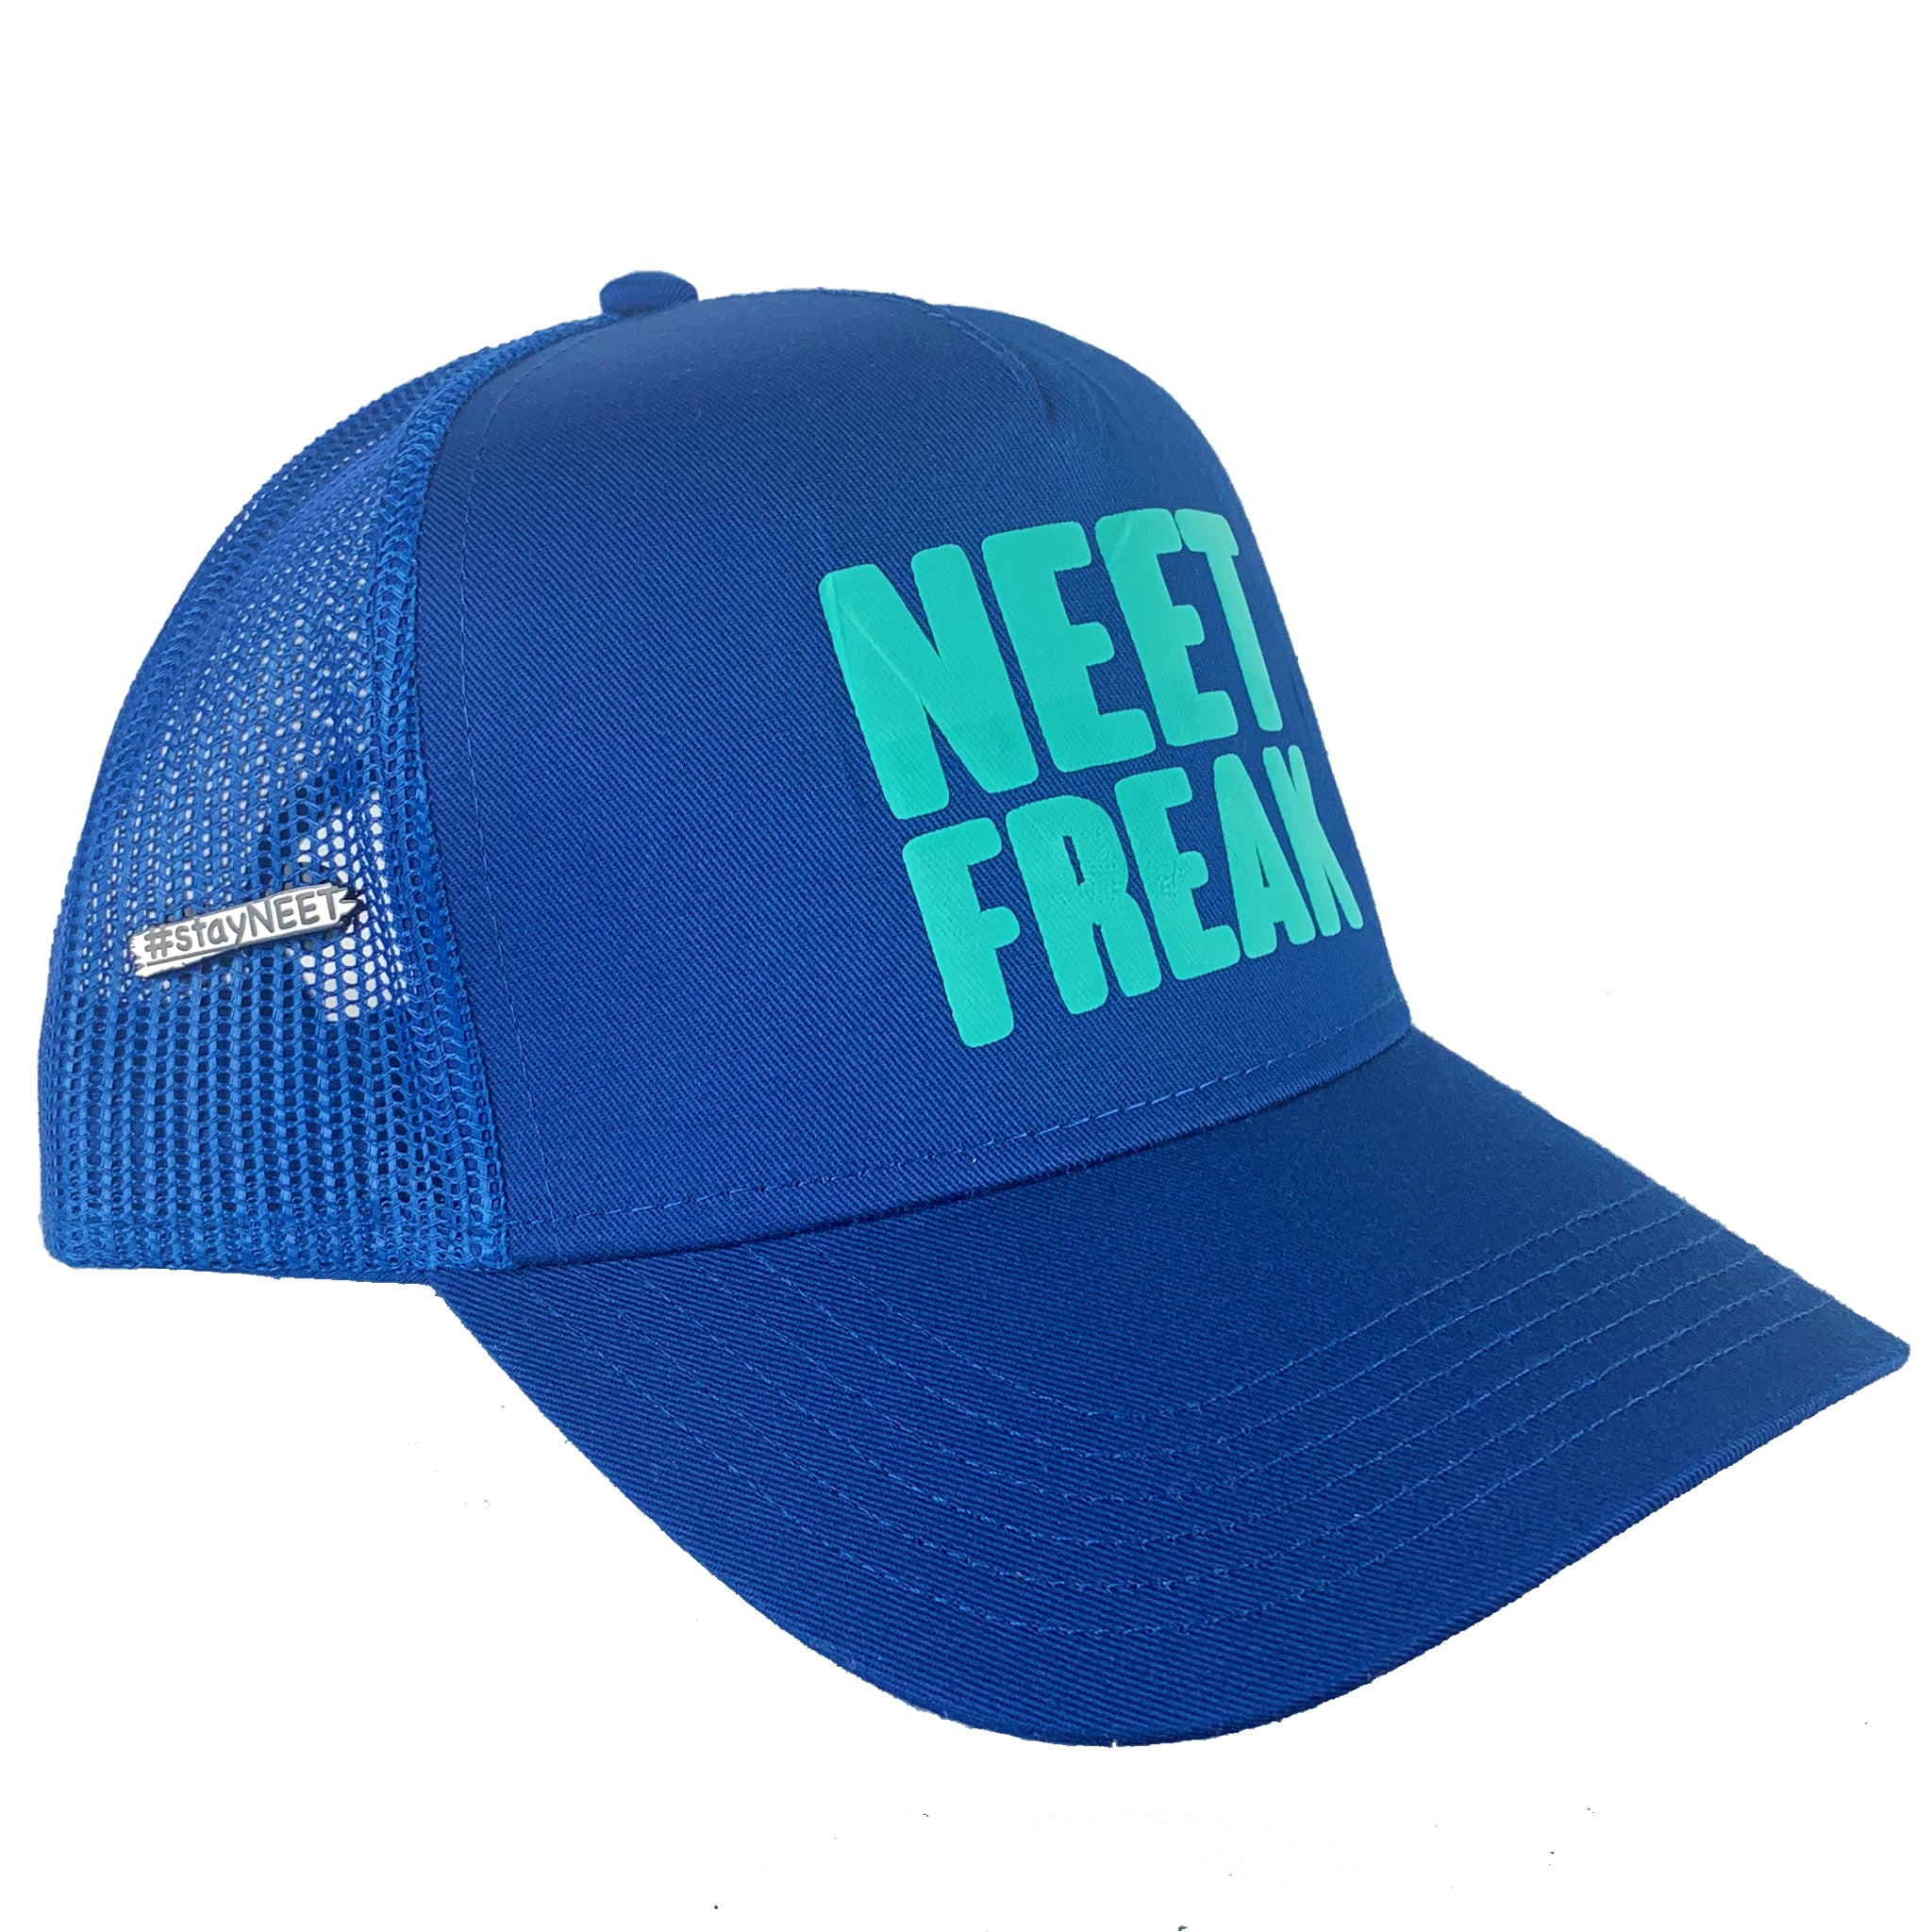 Royal Blue/Green Mesh Trucker Hat 